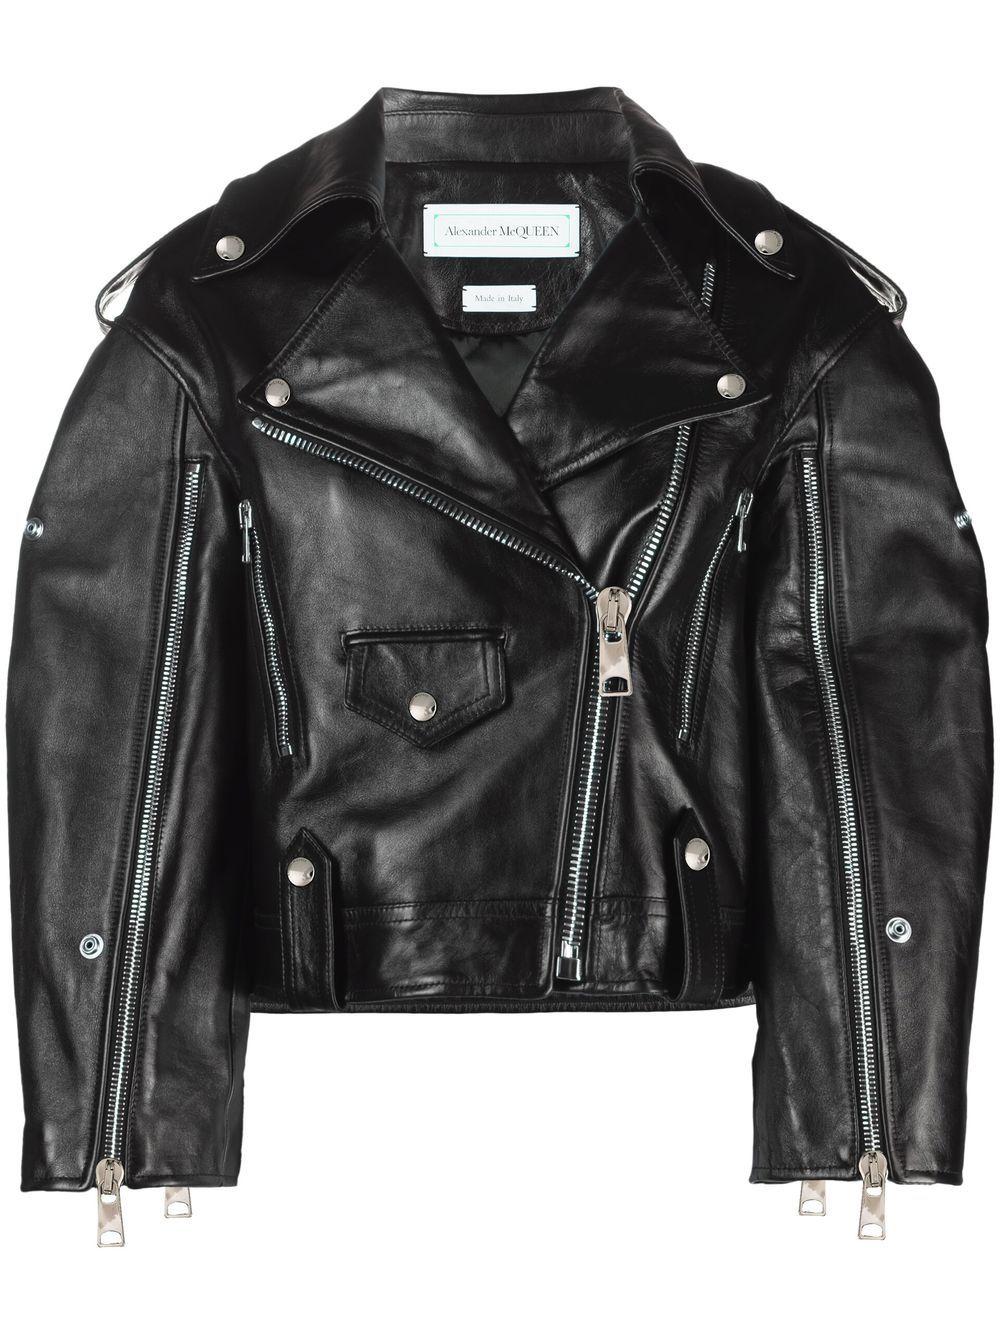 Alexander McQueen Leather Biker Jacket in Black | Lyst